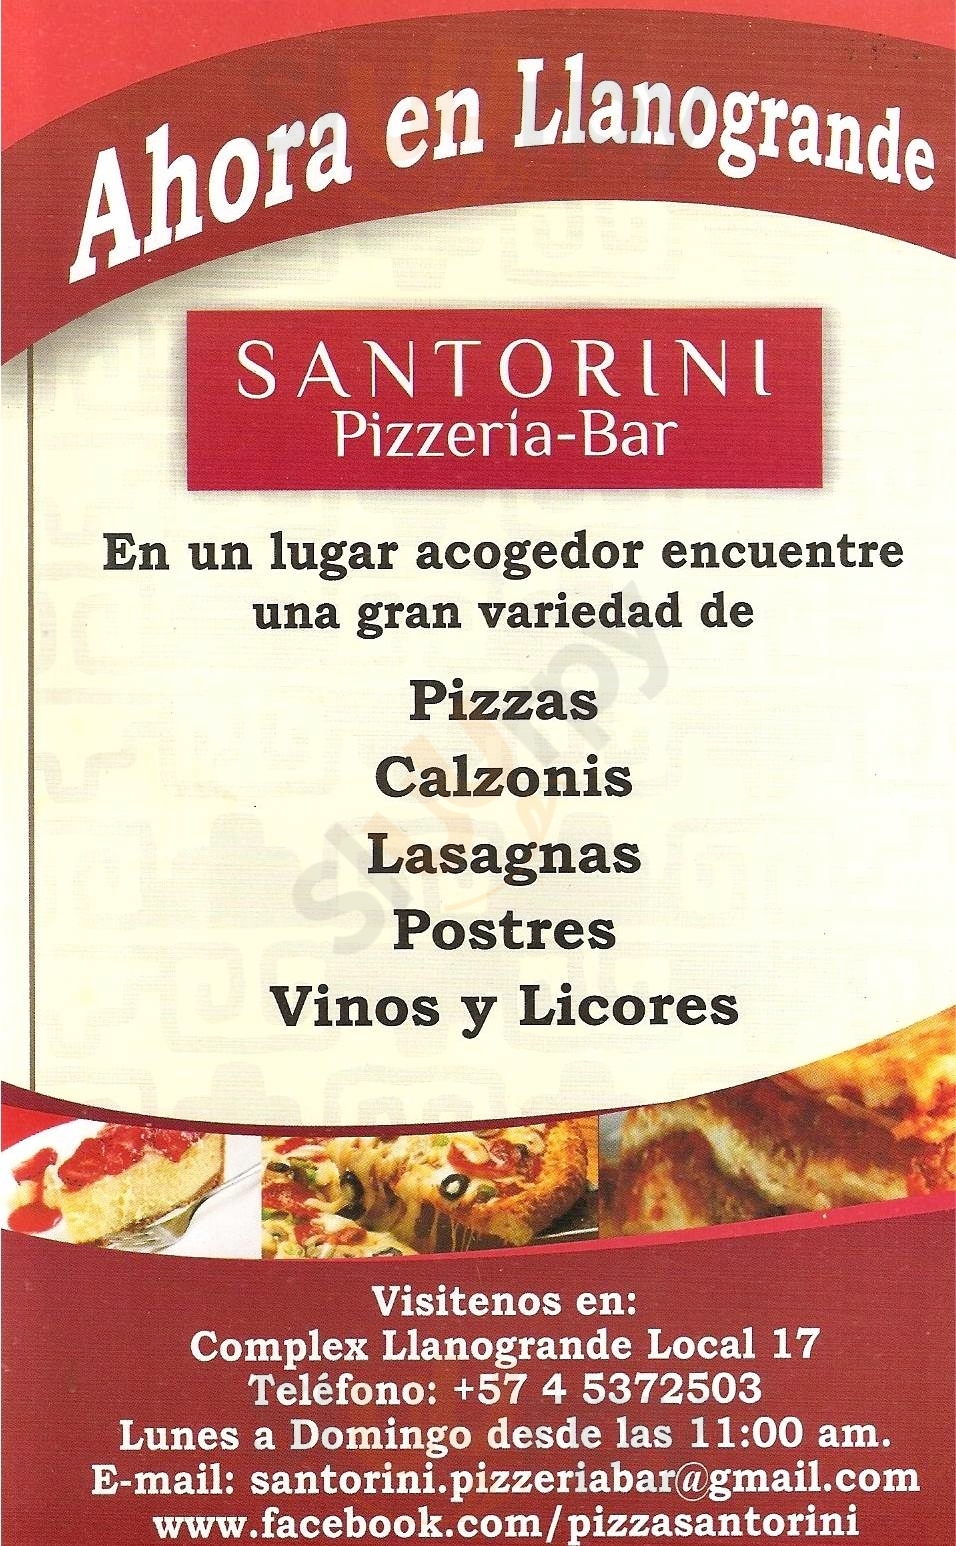 Santorini - Pizzeria Bar Llanogrande Rionegro Menu - 1